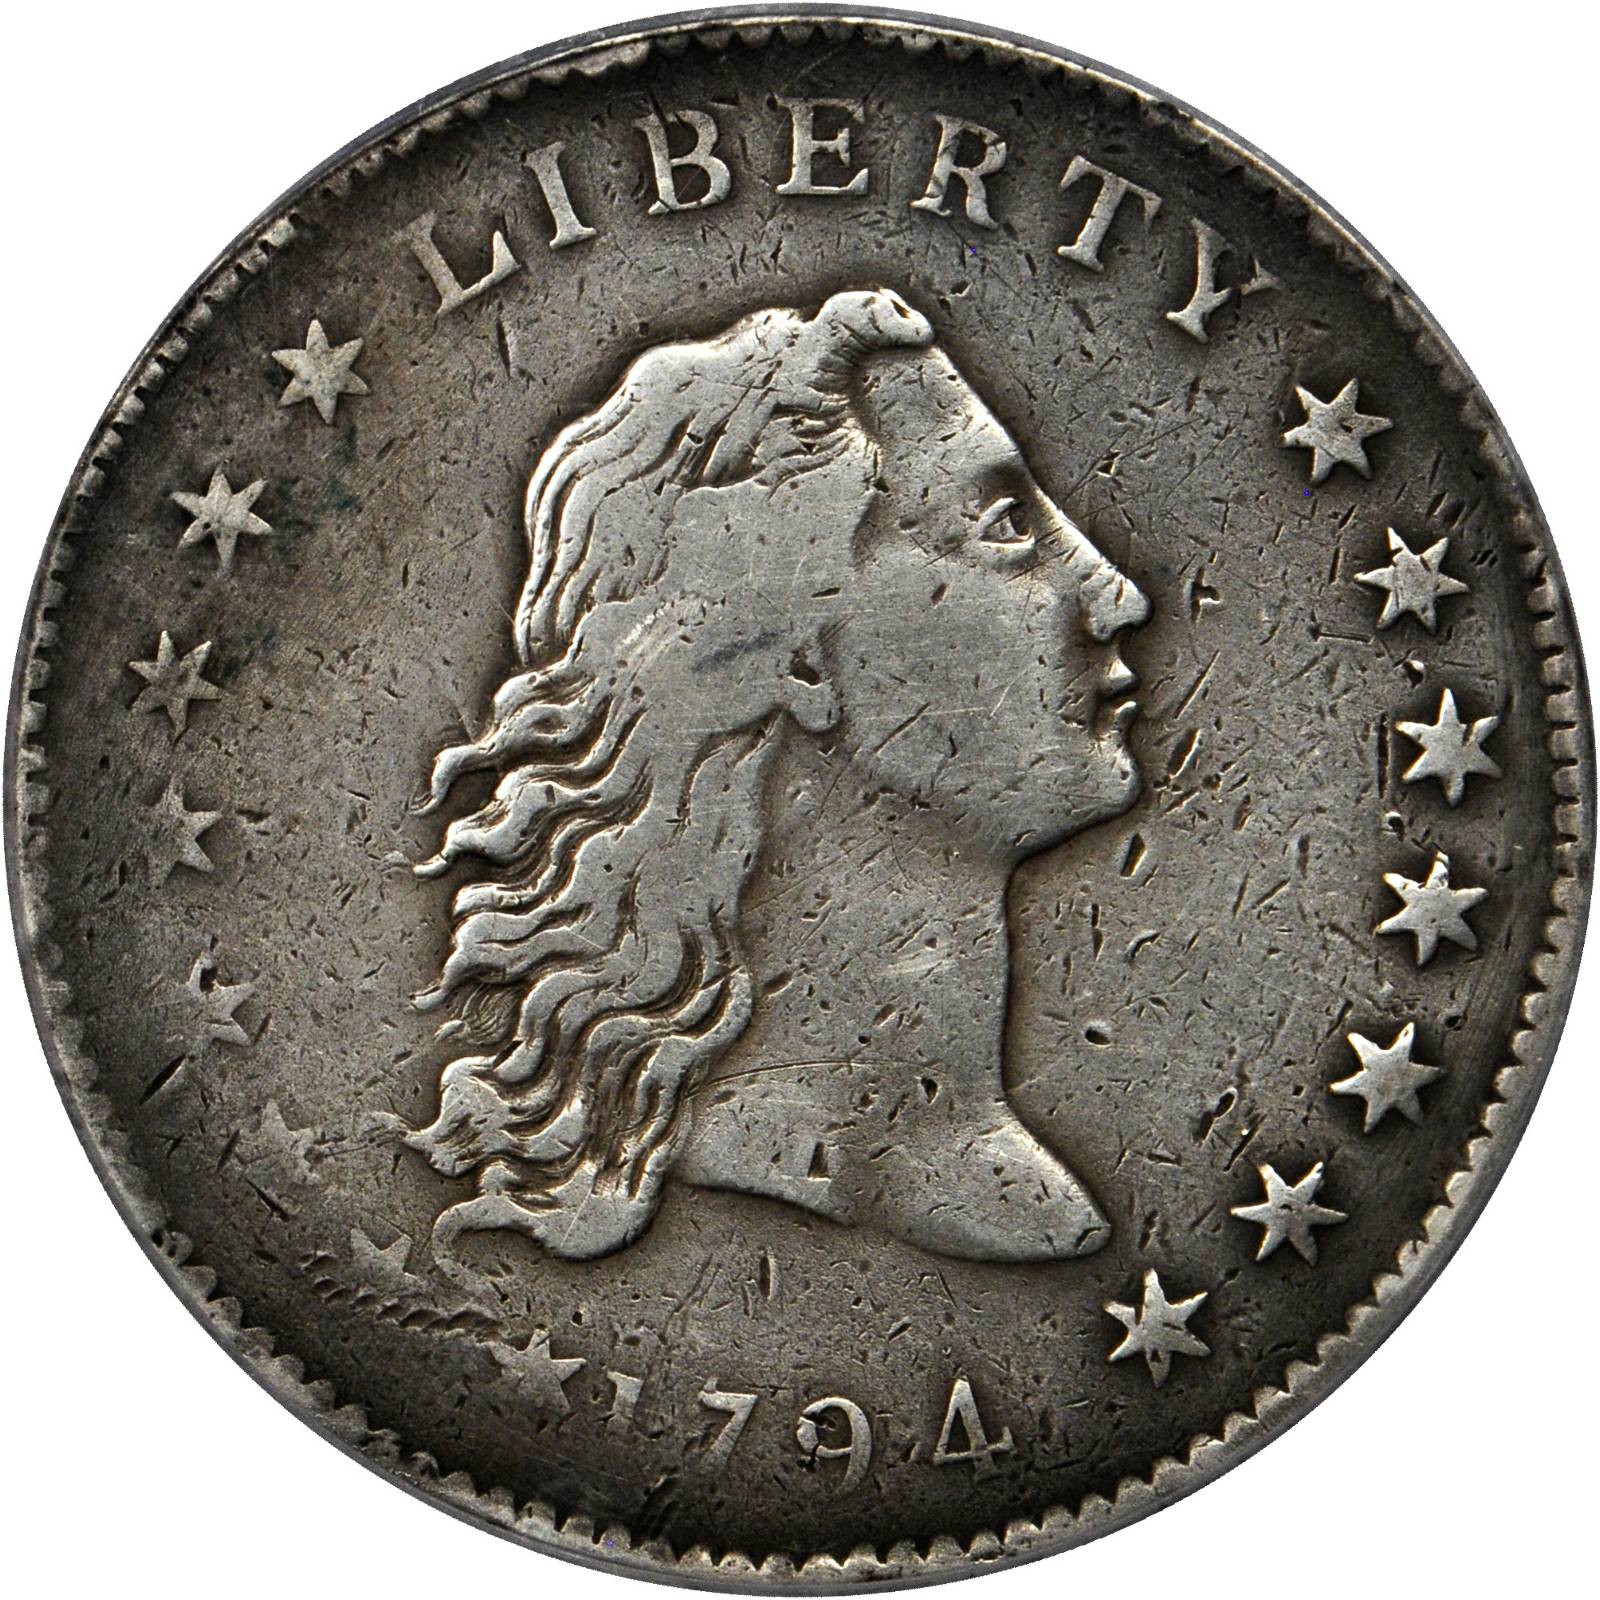 3 18 долларов. Серебряный доллар США Либерти. Монета flowing hair Dollar.. Железный доллар. Доллар 1794.